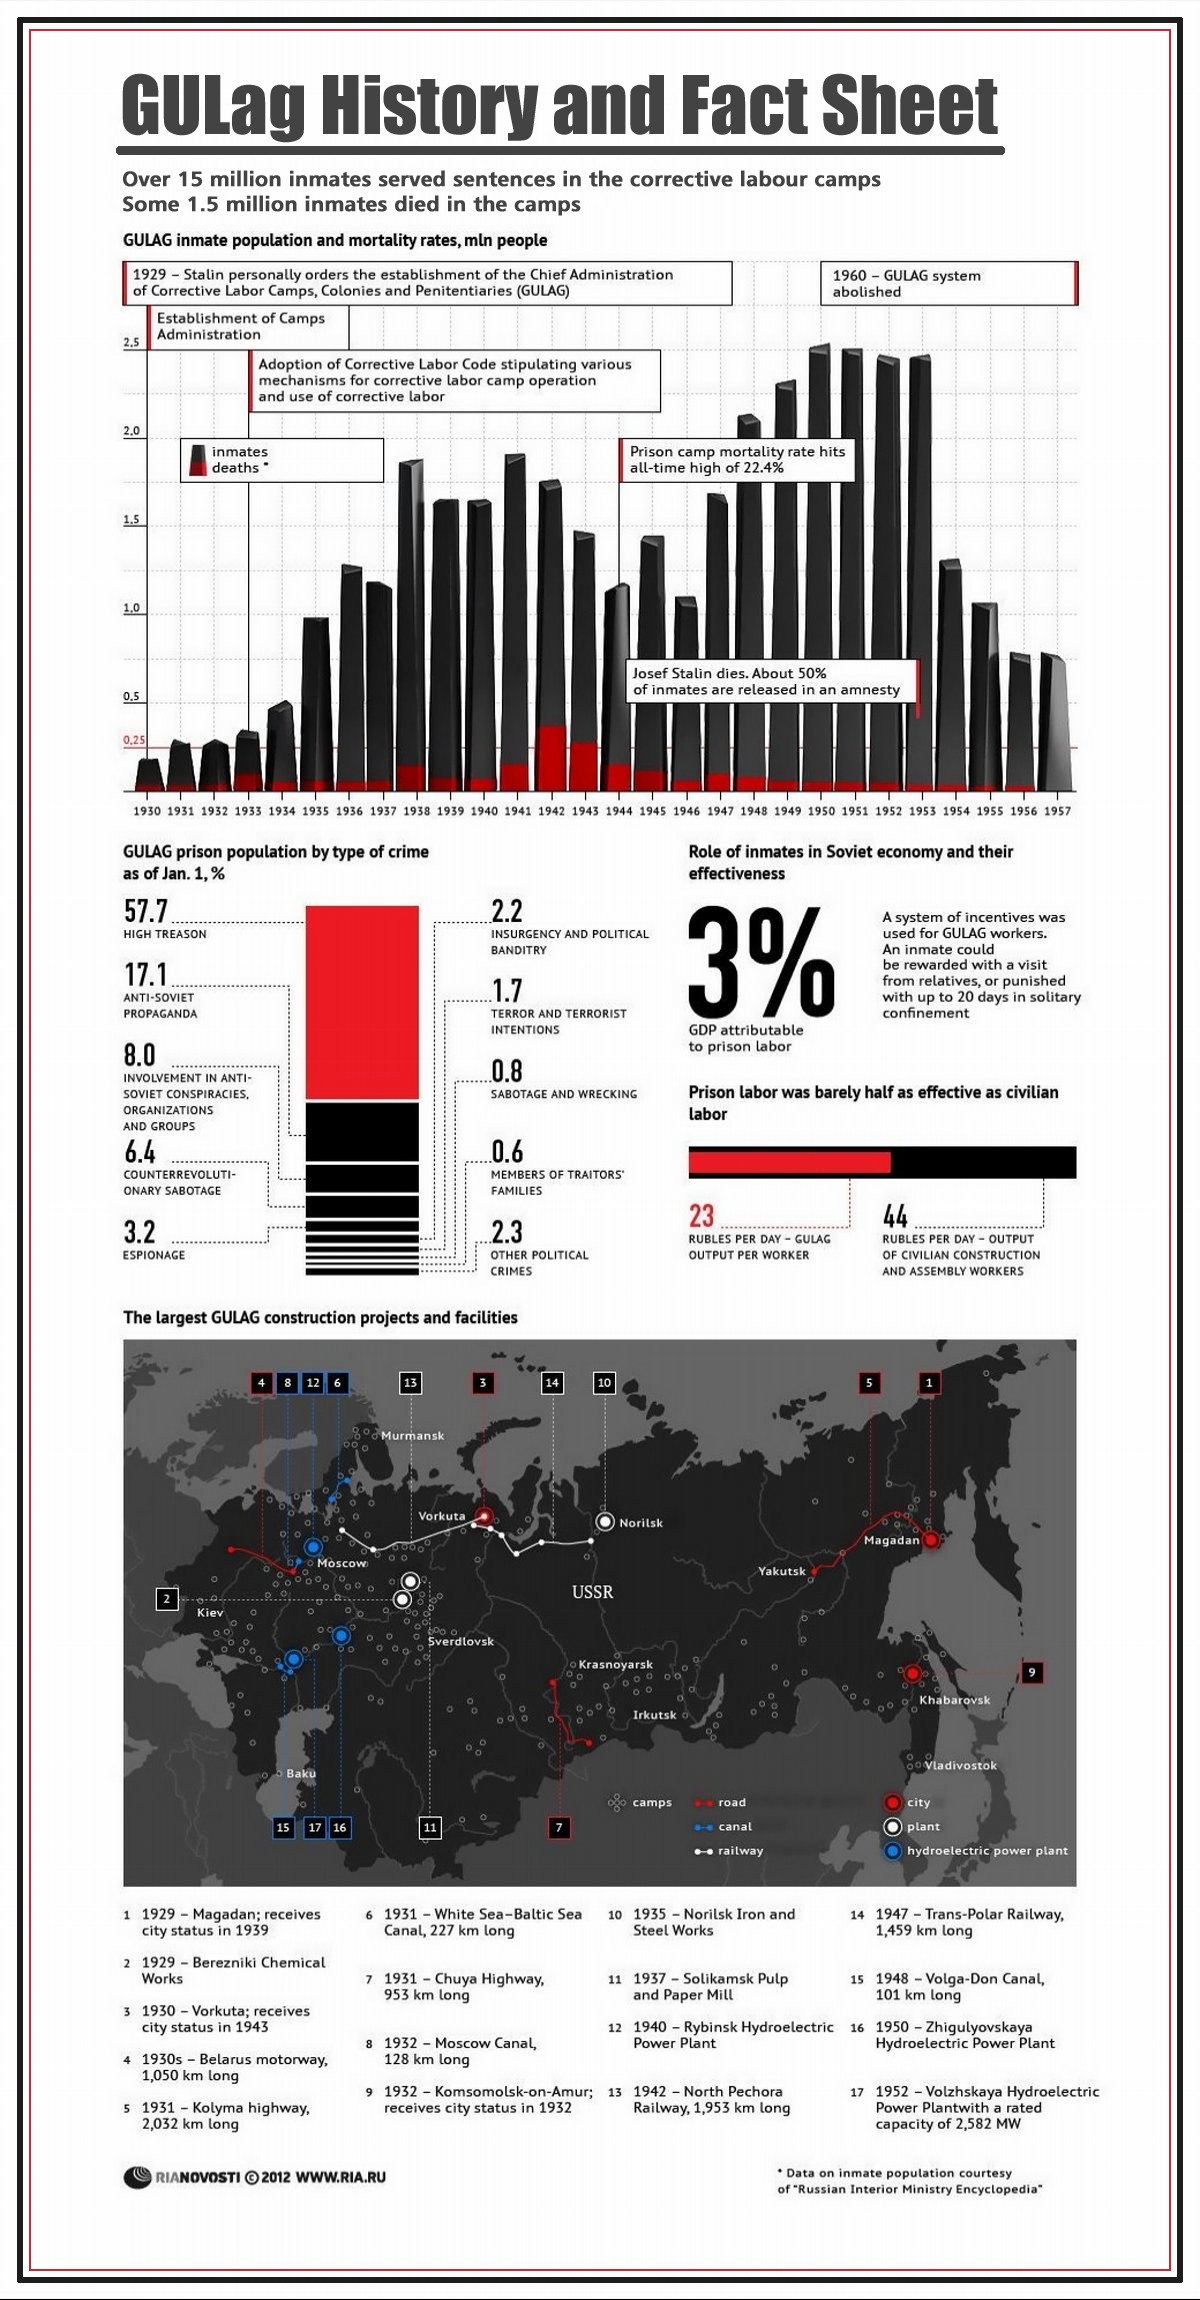 00 RIA-Novosti Infographics. GULAG History and Fact Sheet. 30.0.13